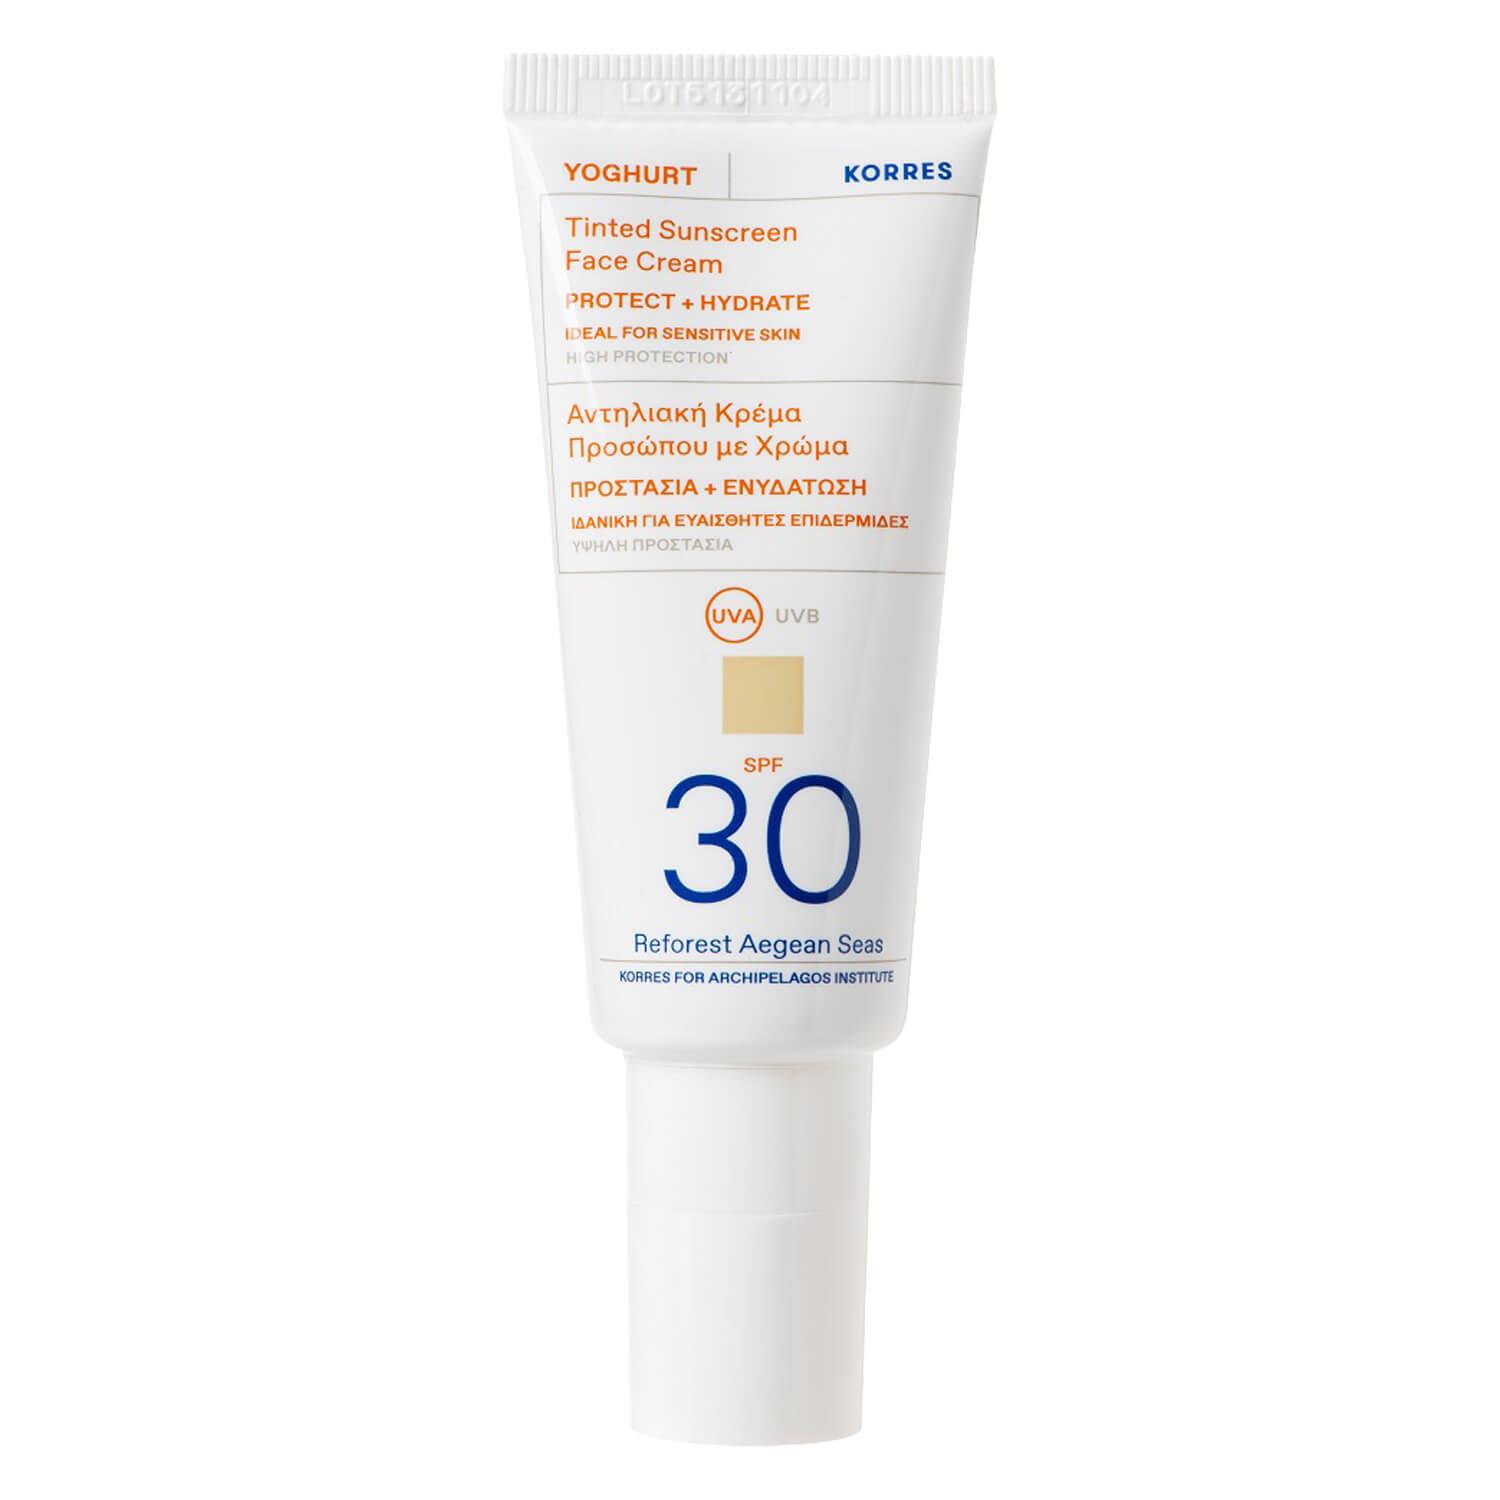 Korres Care - Yoghurt Tinted Sunscreen Face Cream SPF30